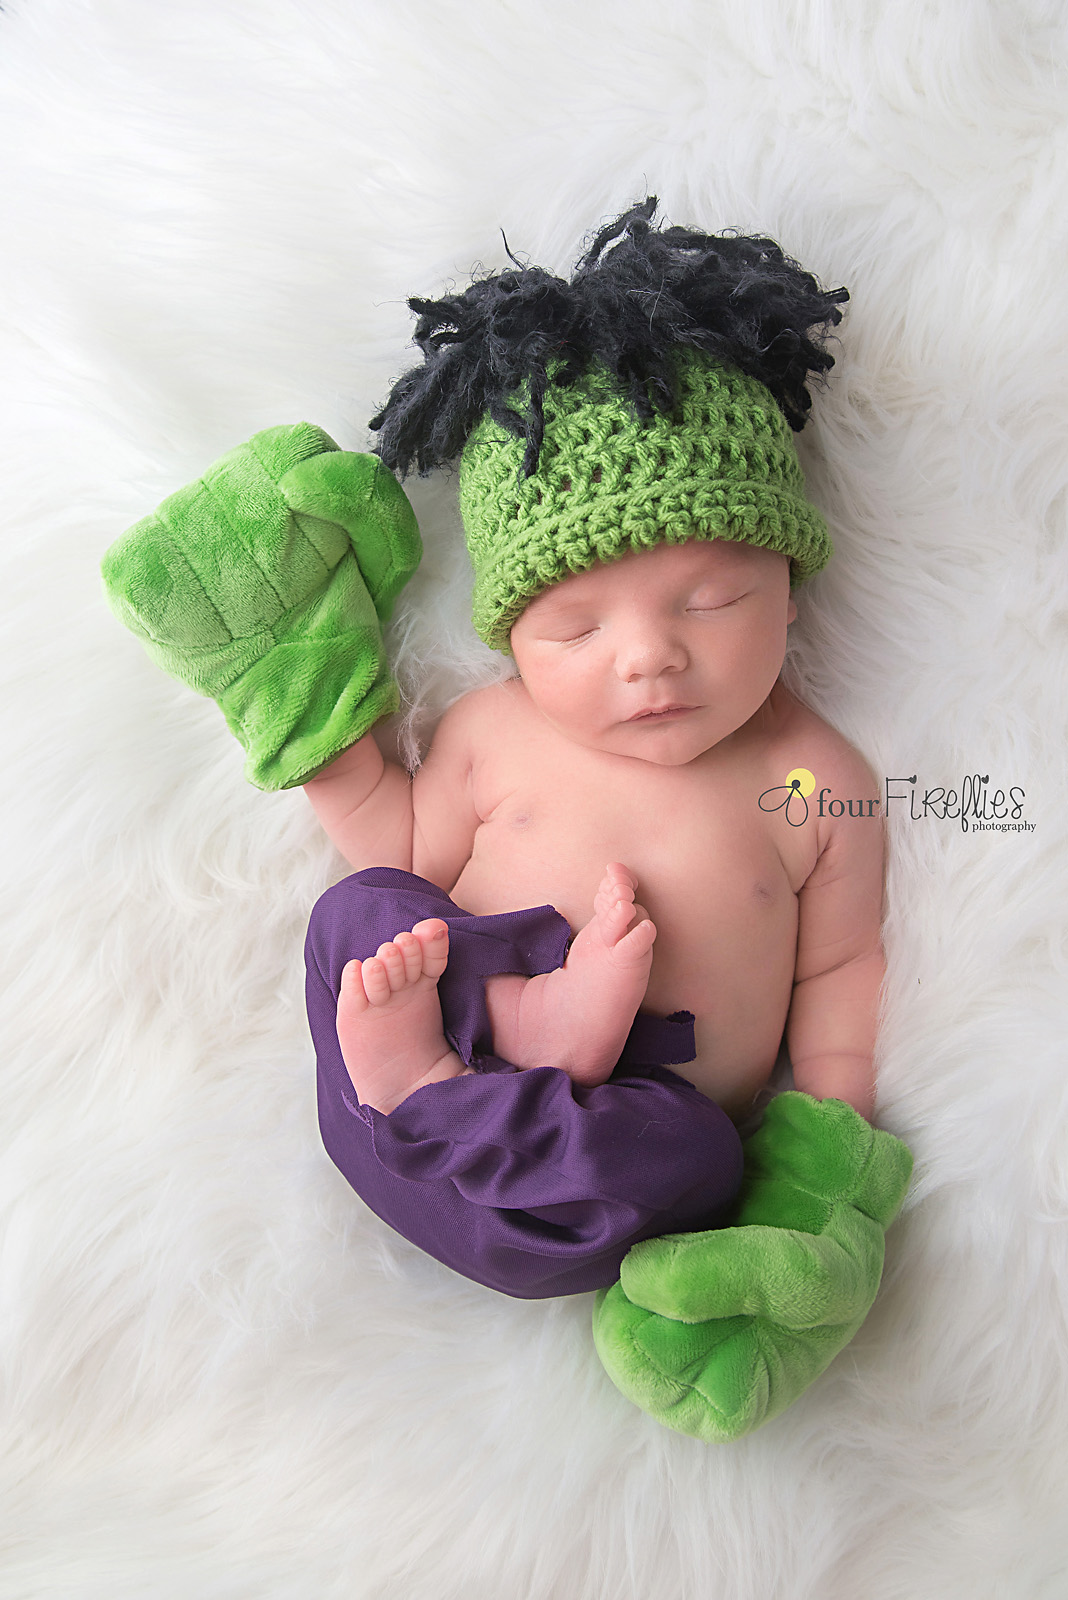 st-louis-newborn-photographer-baby-boy-in-hulk-costume-with-hands-and-purple-pants.jpg